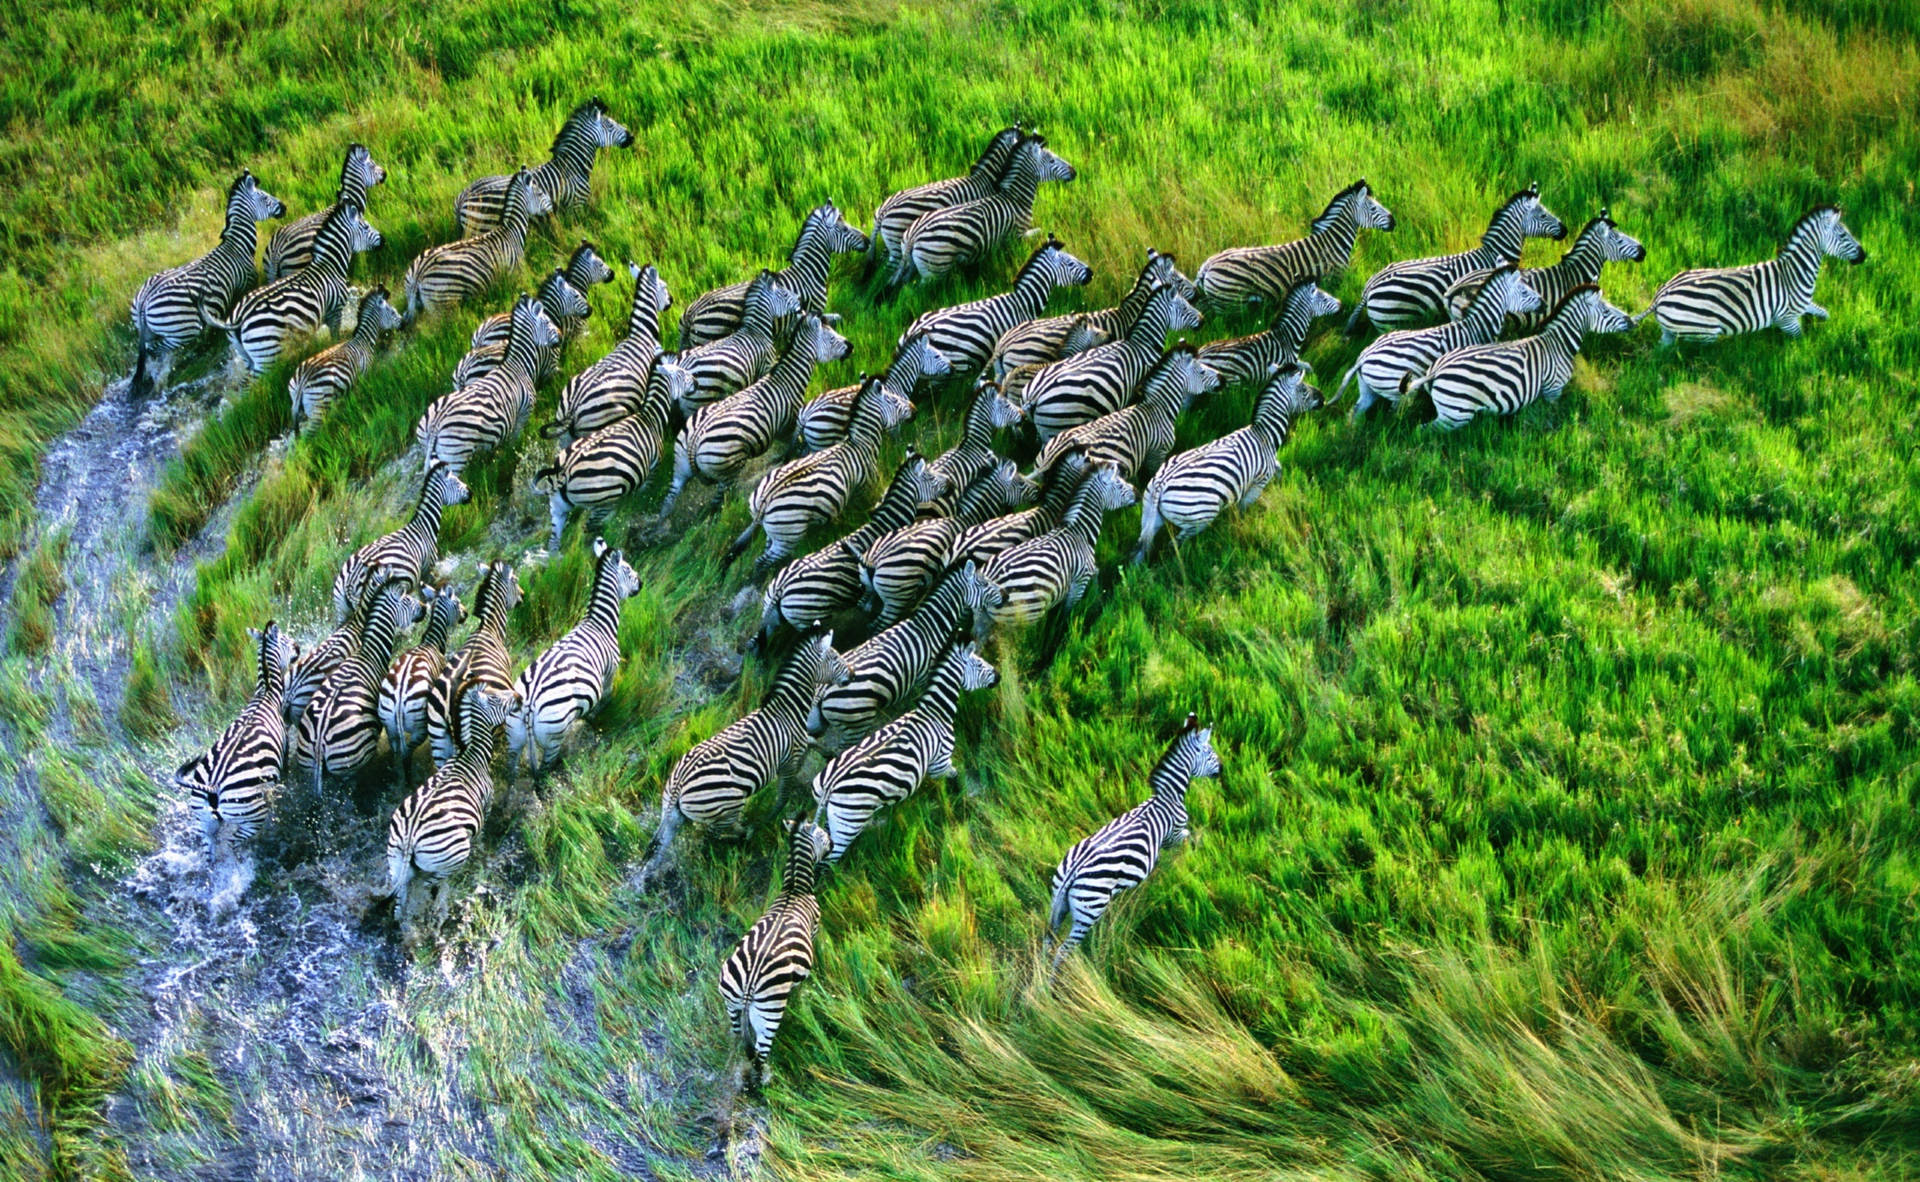 A Herd Of Zebras Running On Grassland Background